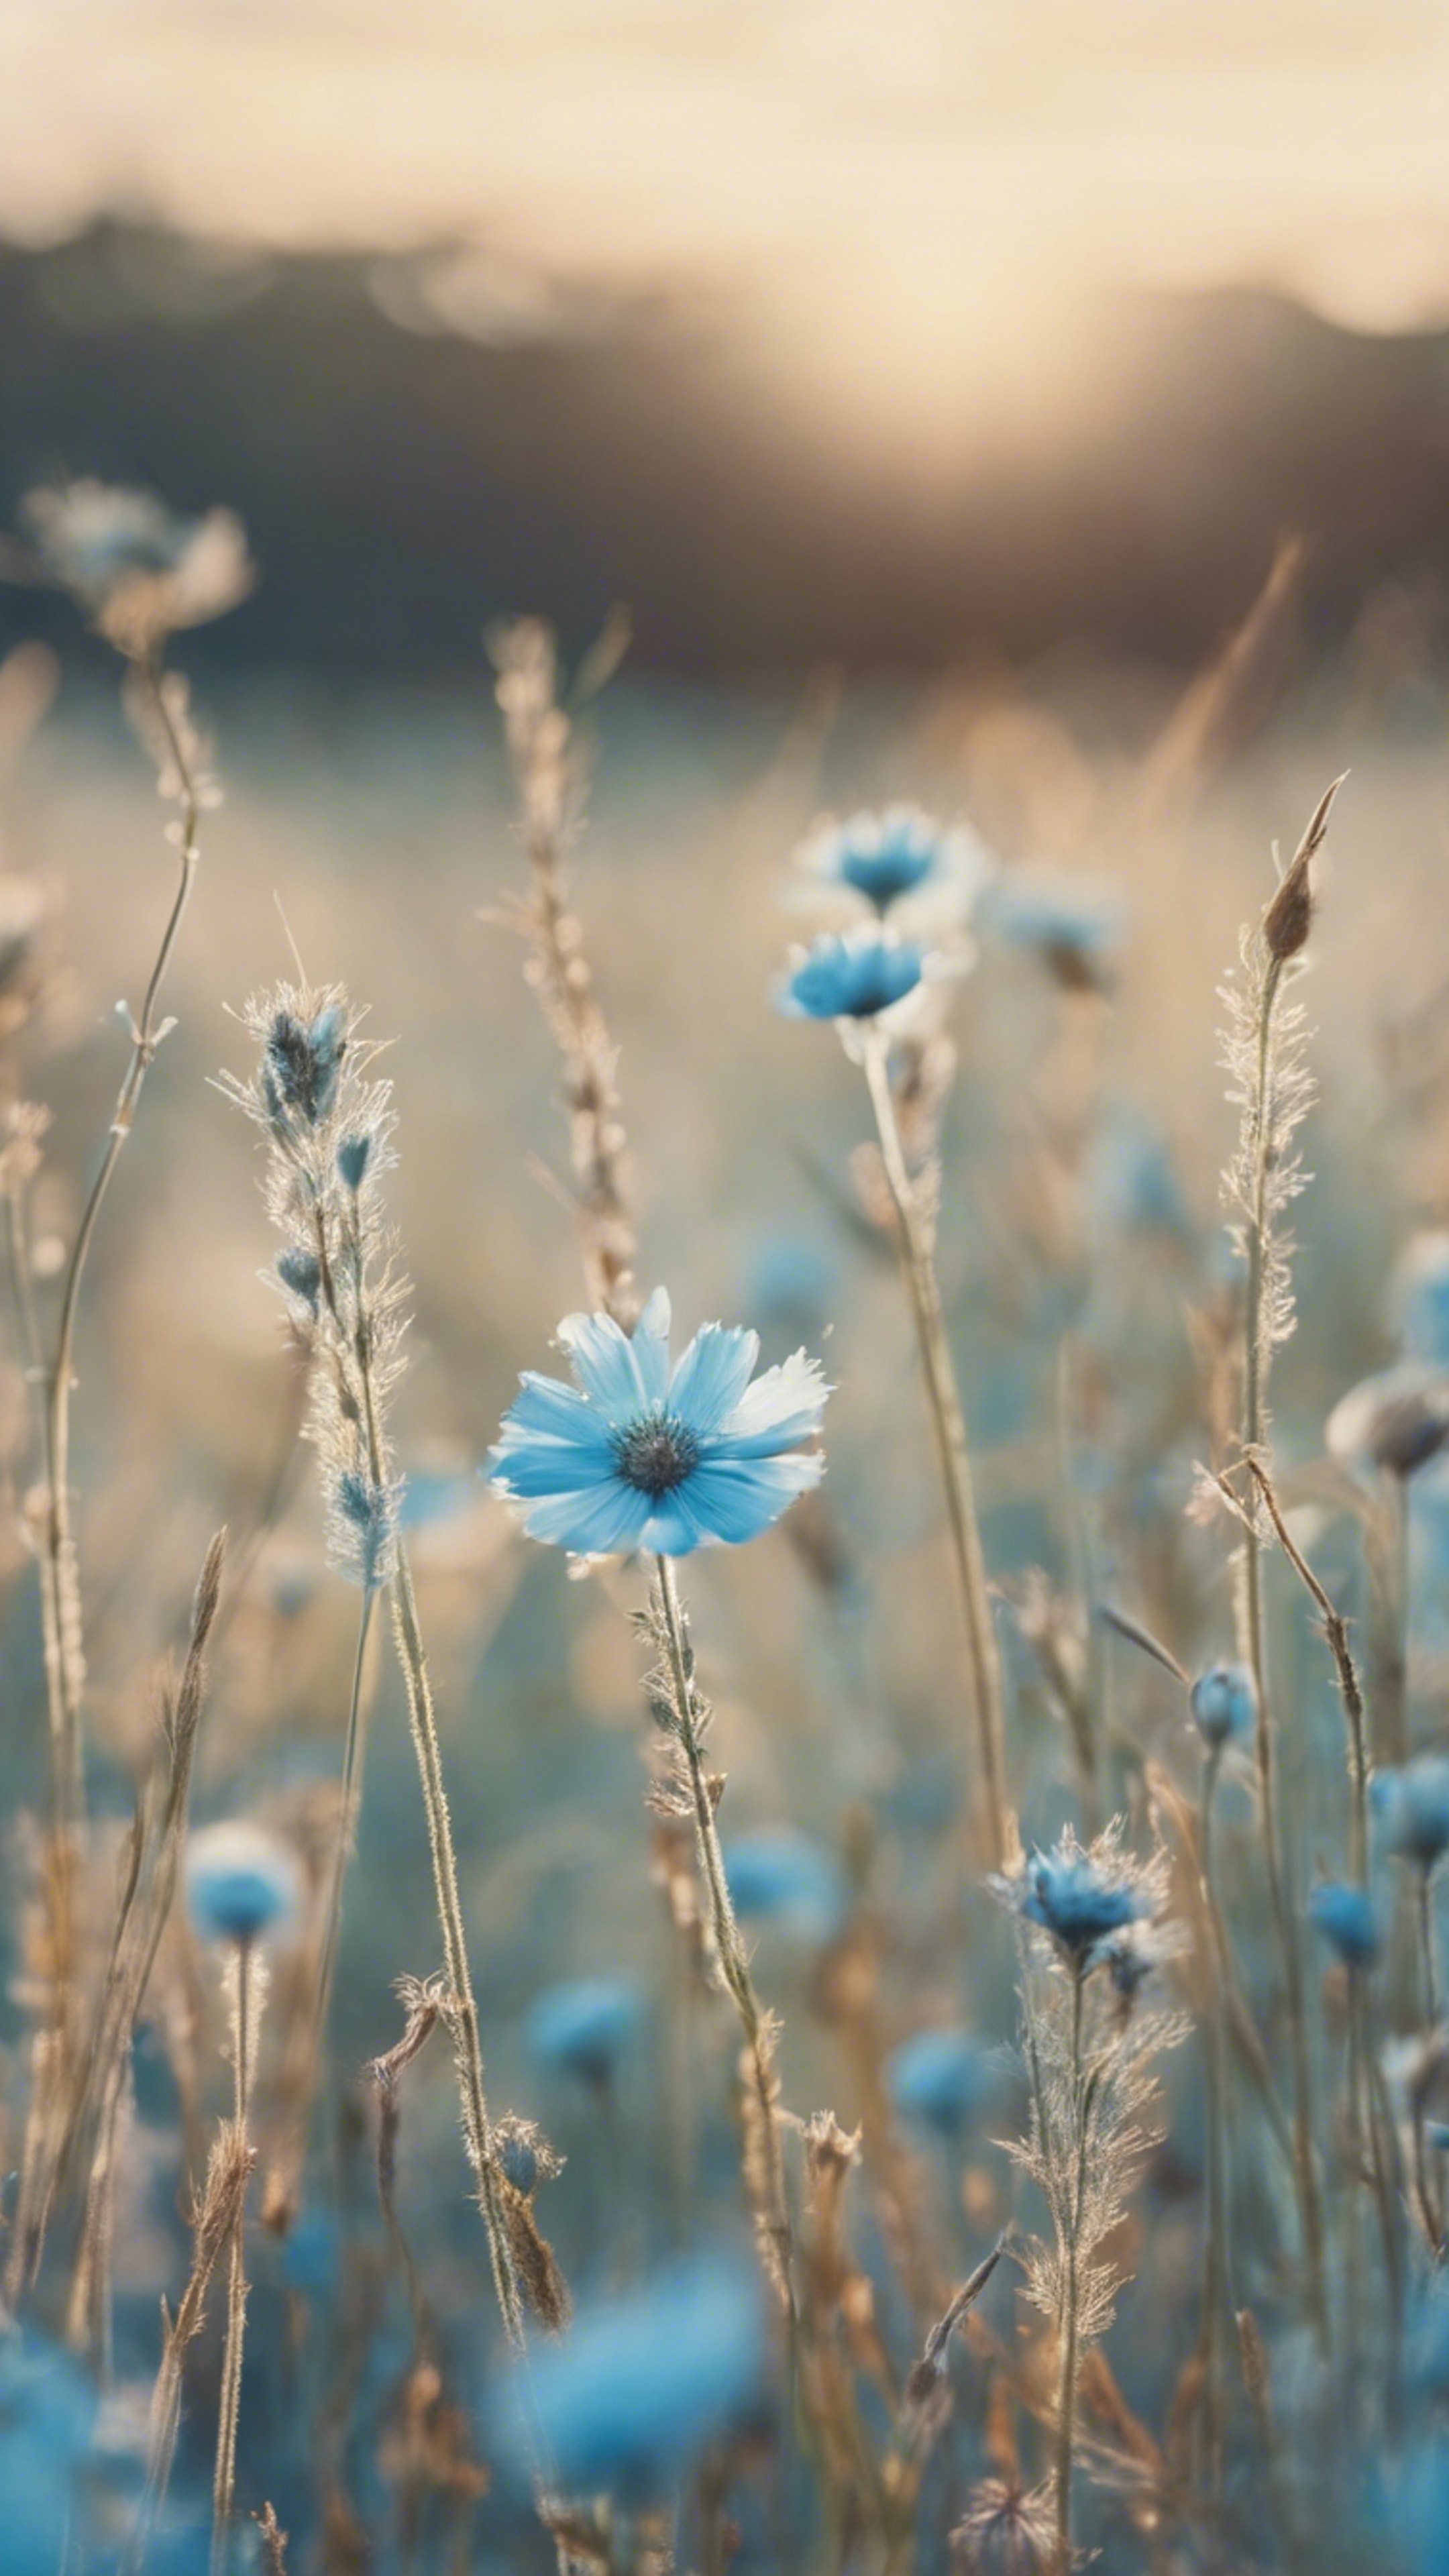 A peaceful pastel blue meadow under a clear sky. Wallpaper[237c4d0b569745d38be8]